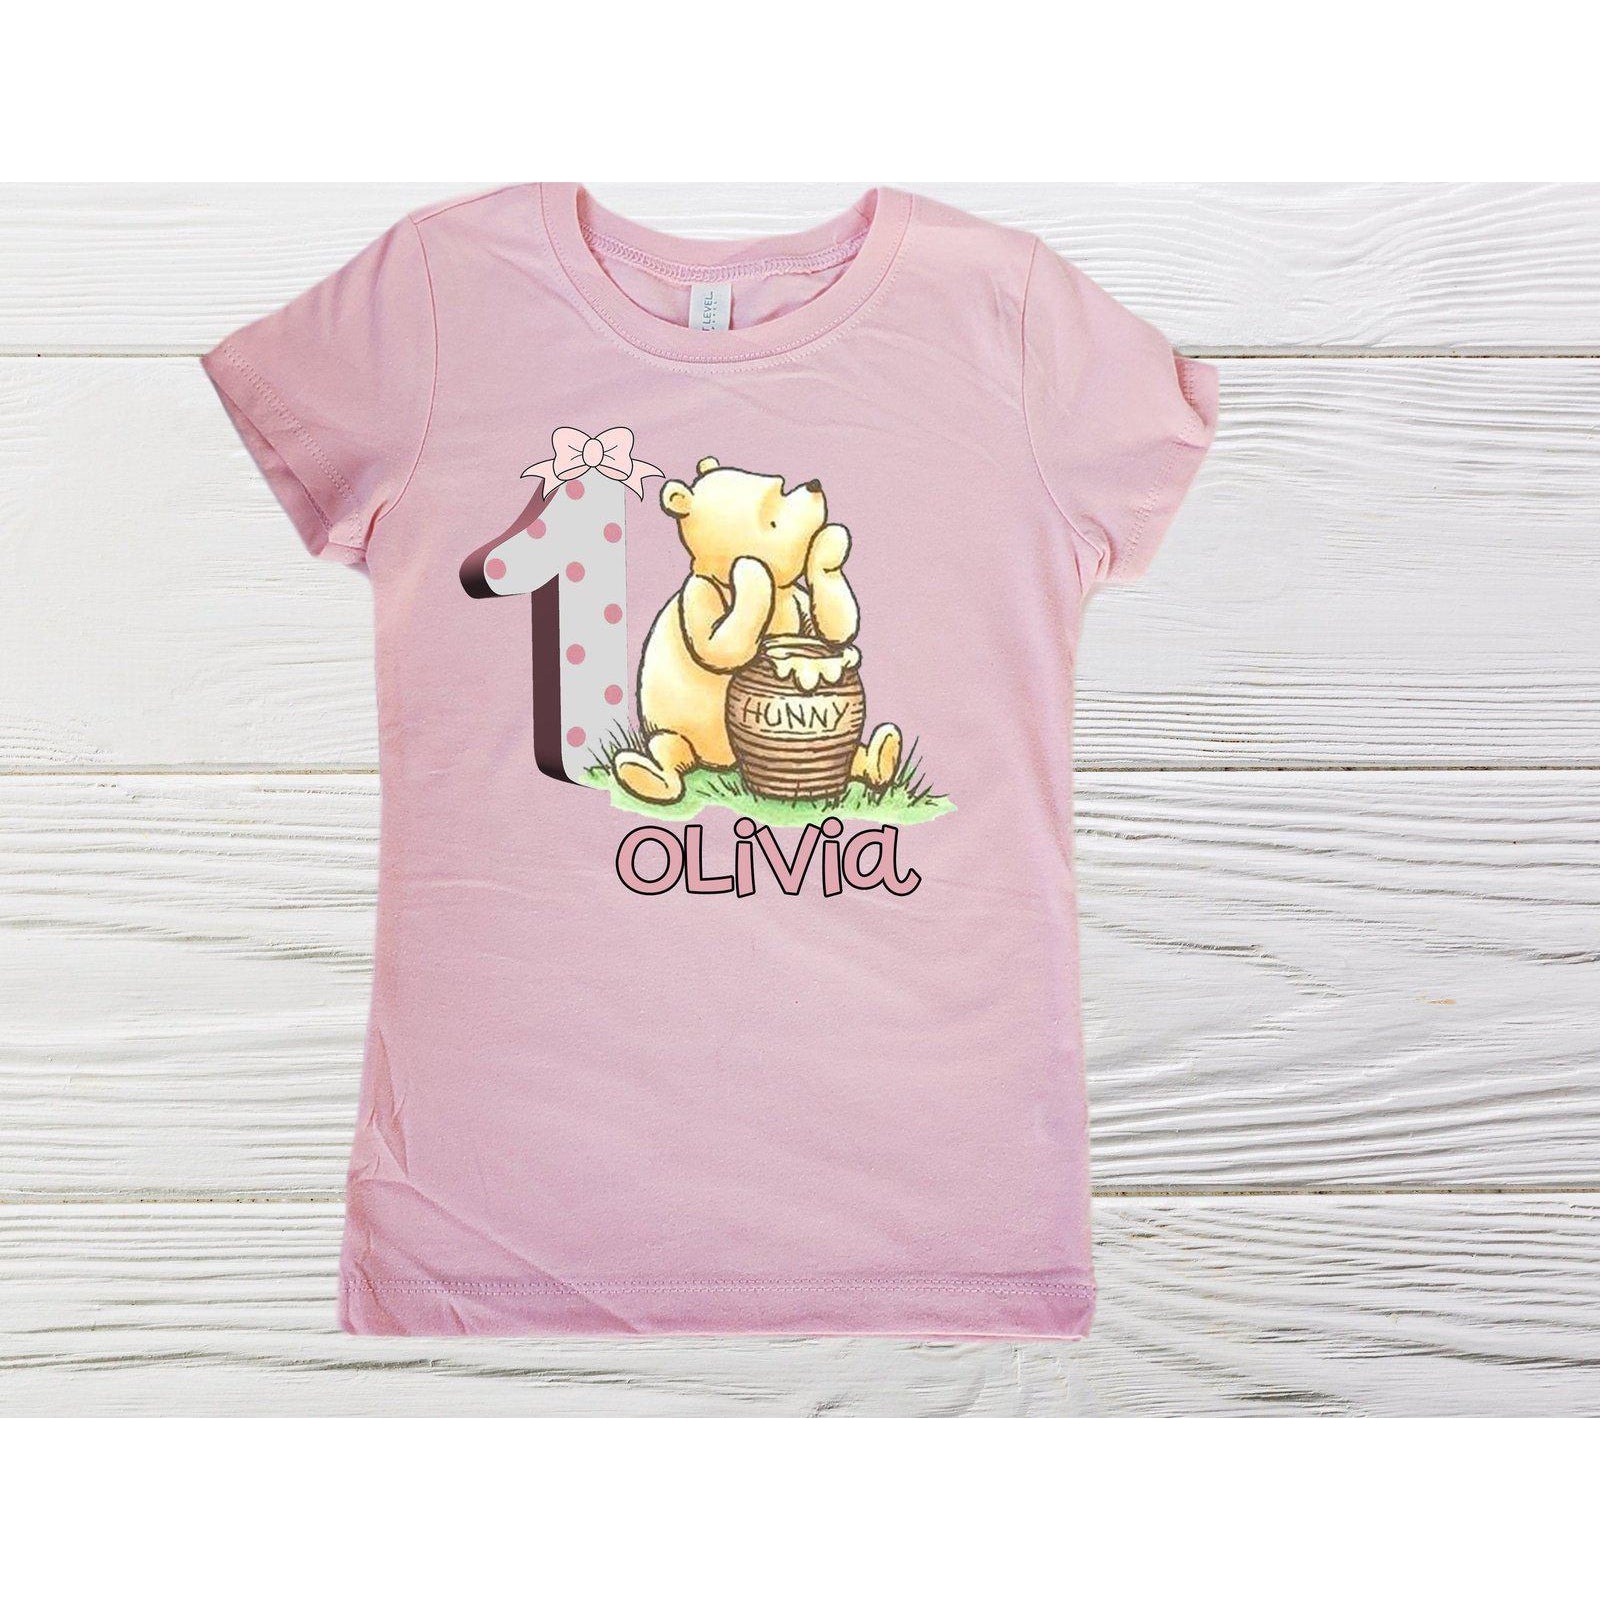 Winnie the Pooh birthday shirt 